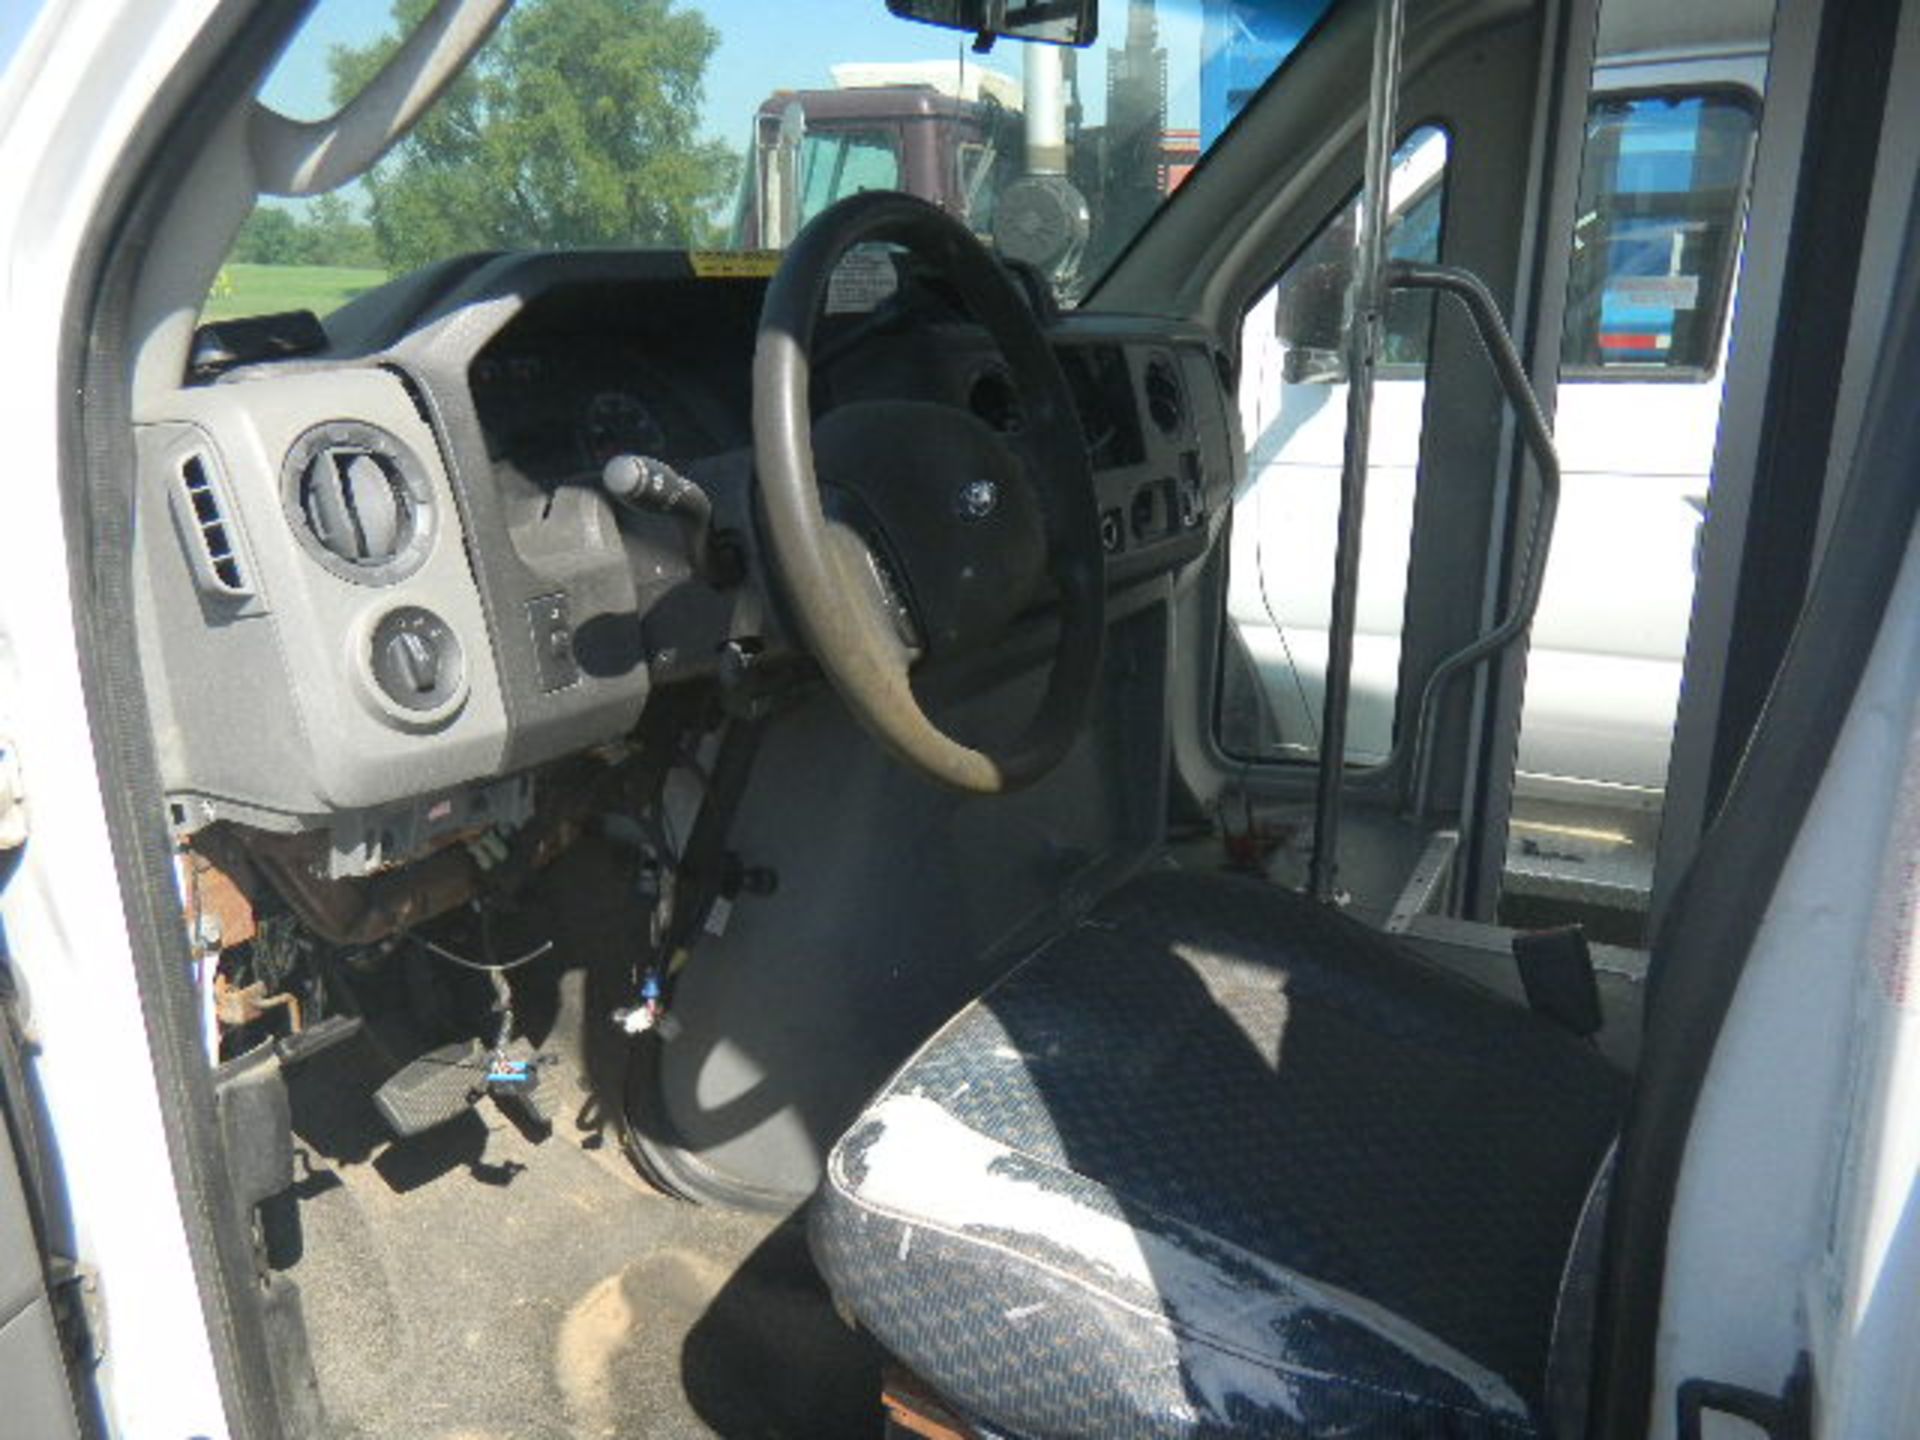 2009 Eldorado Aerolite Transit Bus - Asset I.D. #621 - Last of Vin (A88398) - Image 4 of 6